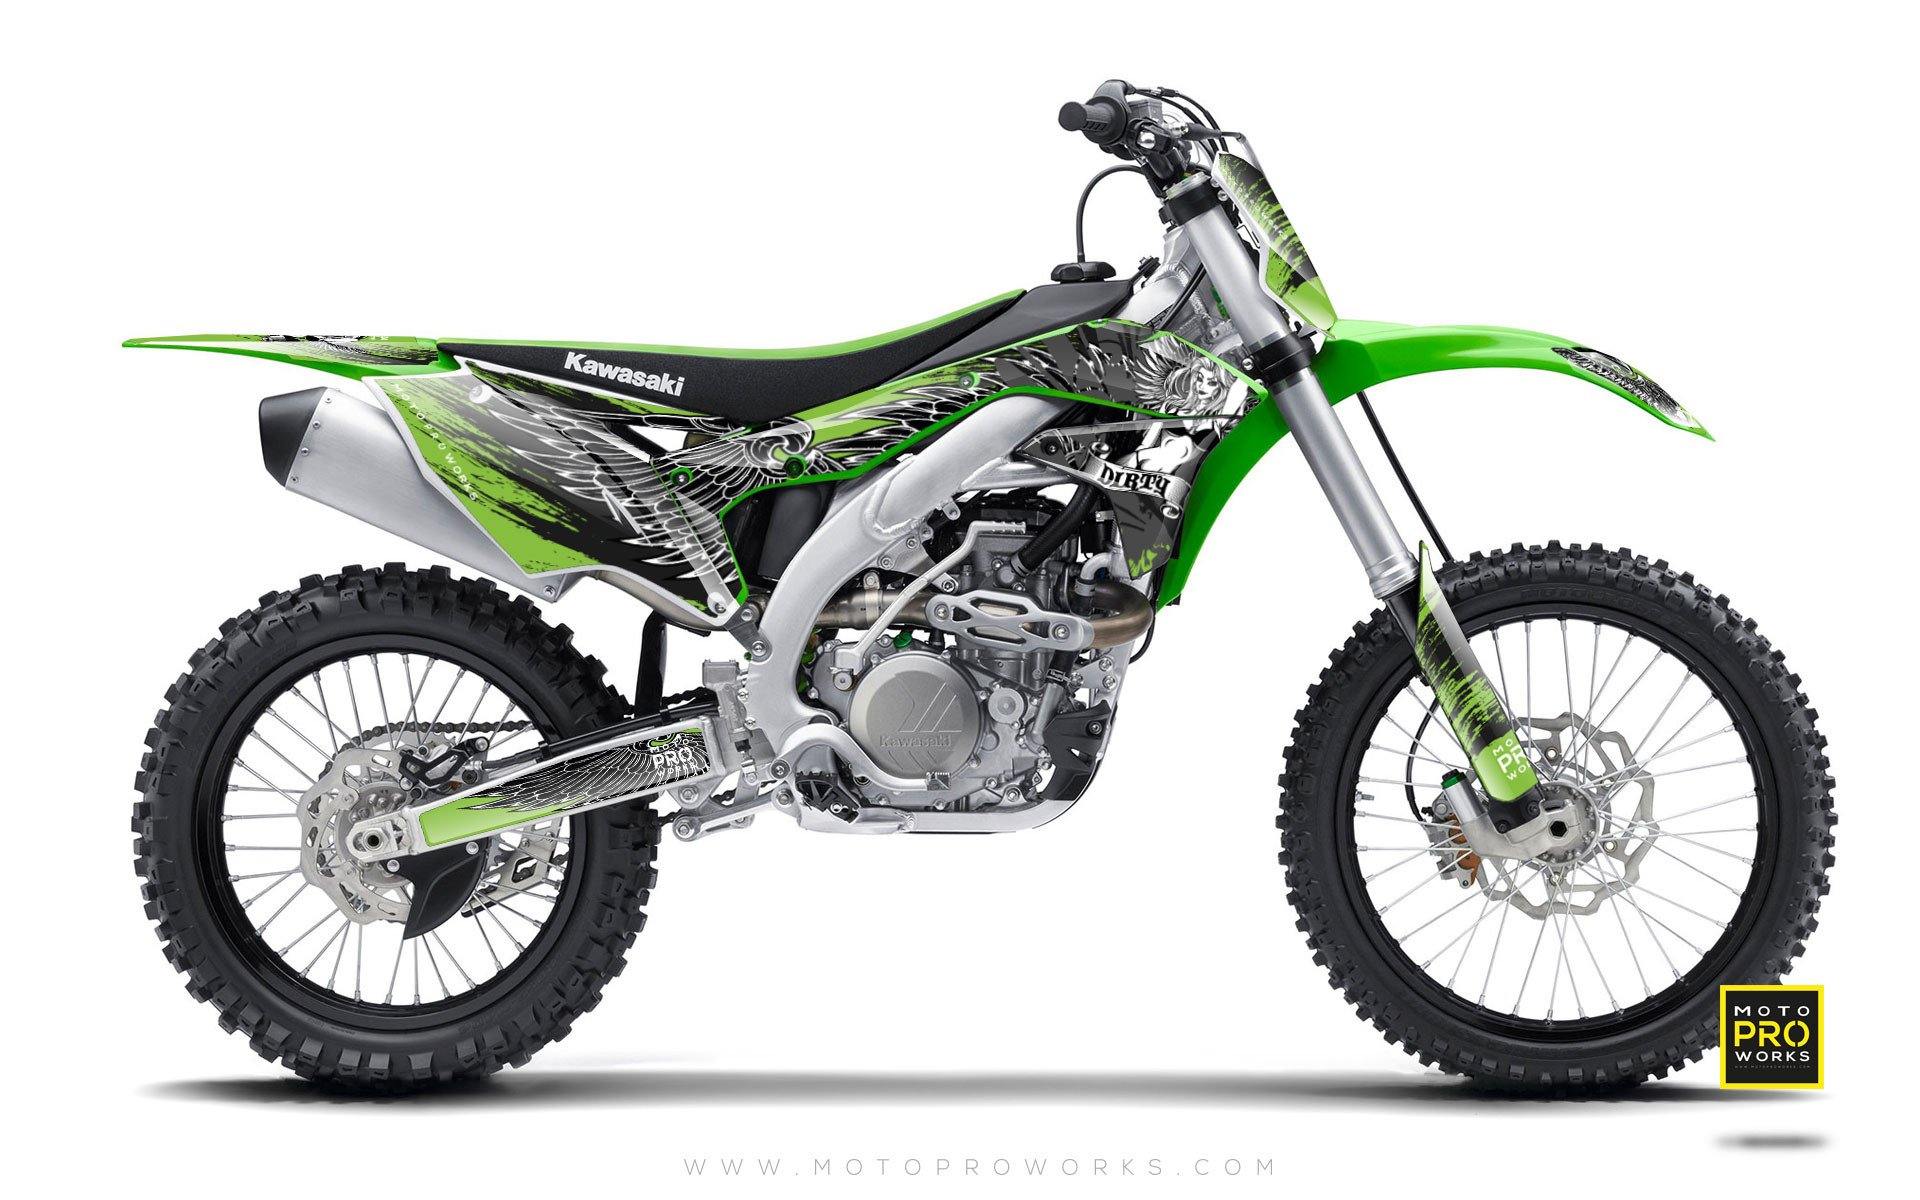 Kawasaki GRAPHIC KIT - "Dirty Angel" (green) - MotoProWorks | Decals and Bike Graphic kit